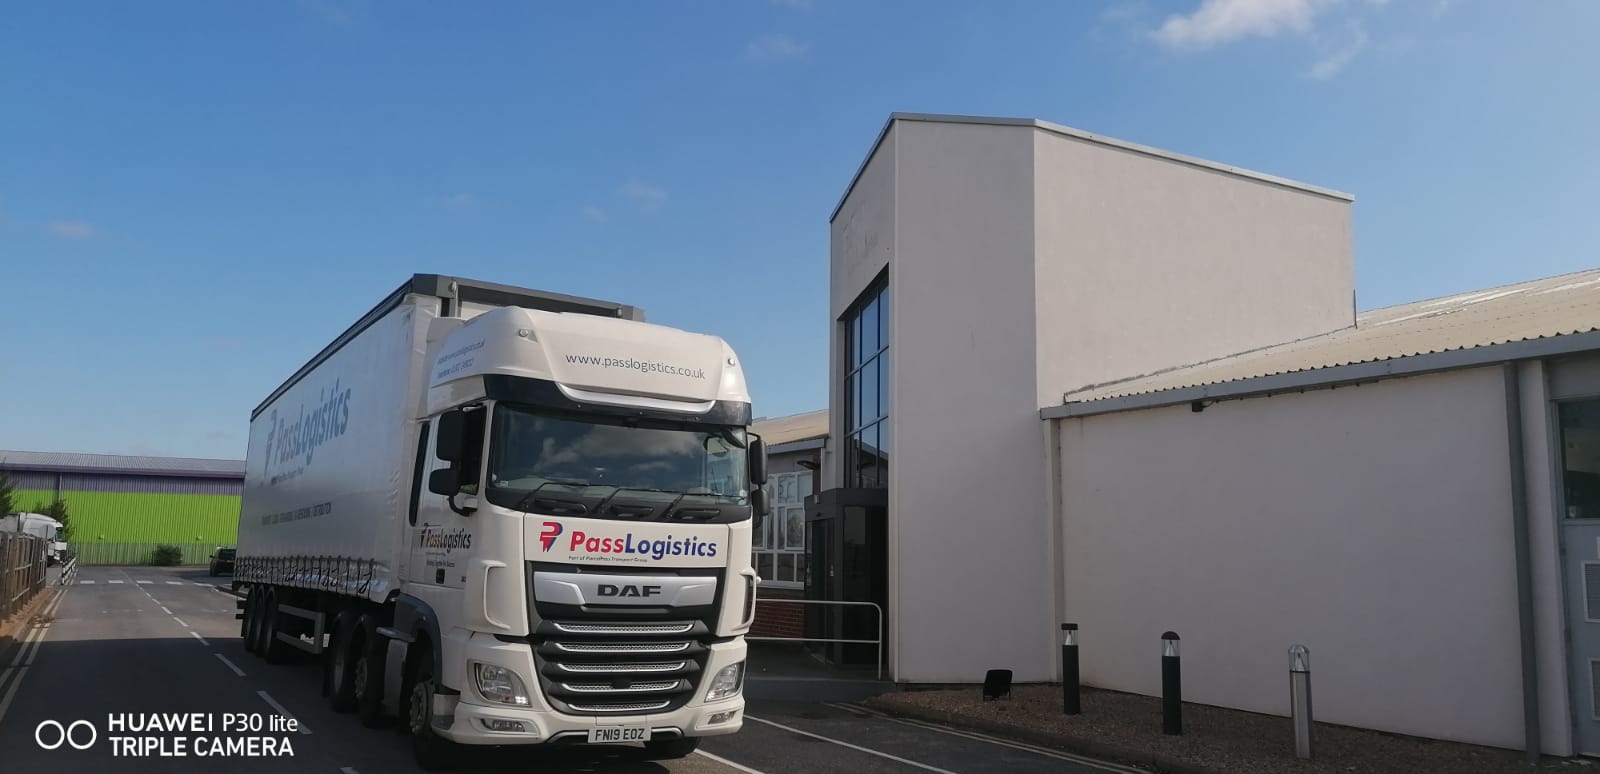 Pass Logistics Acquires Iconic Eaton Park Building in Doncaster